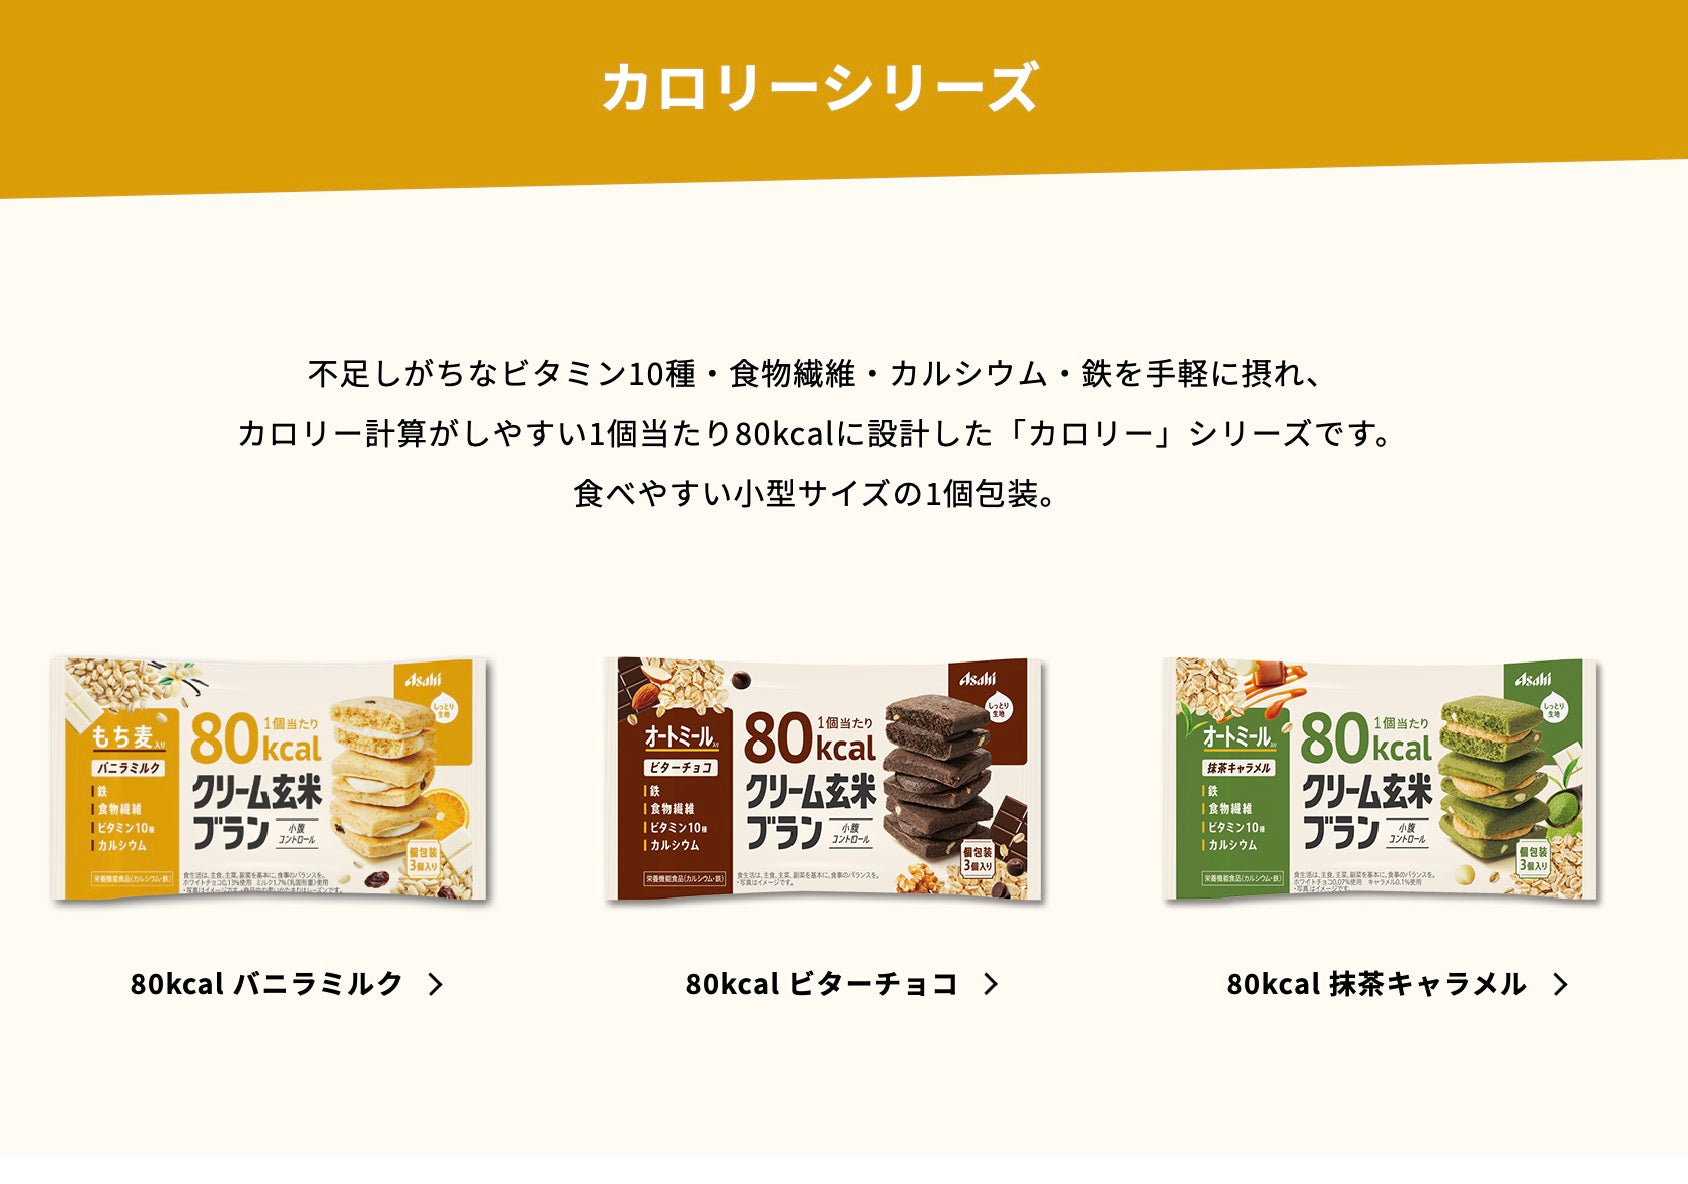 Asahi朝日低卡低热量糙米玄米夹心饼干营养代餐80千卡 3种口味选